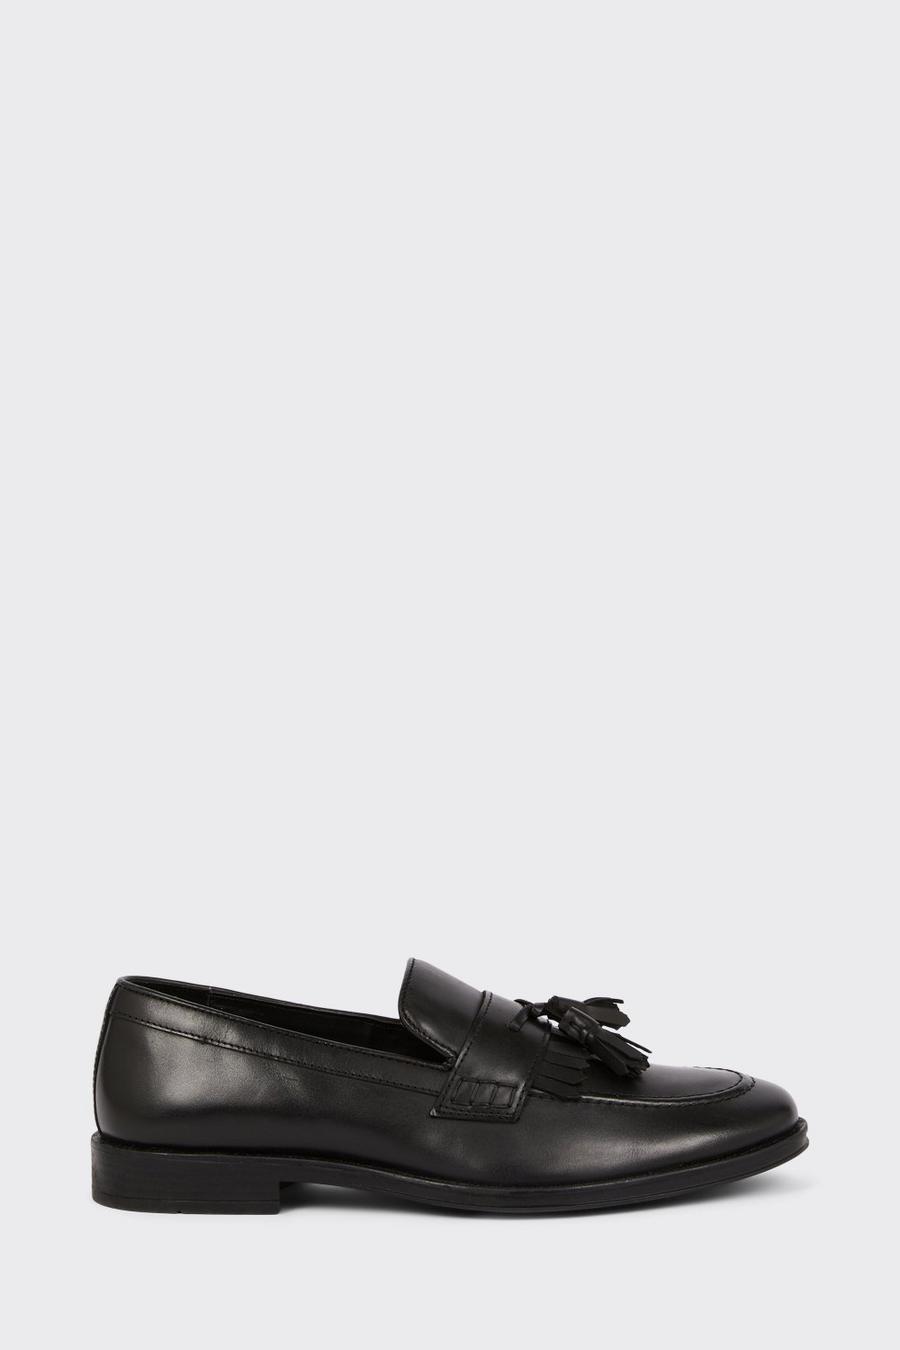 Black Smart Leather Tassel Slip On Loafers